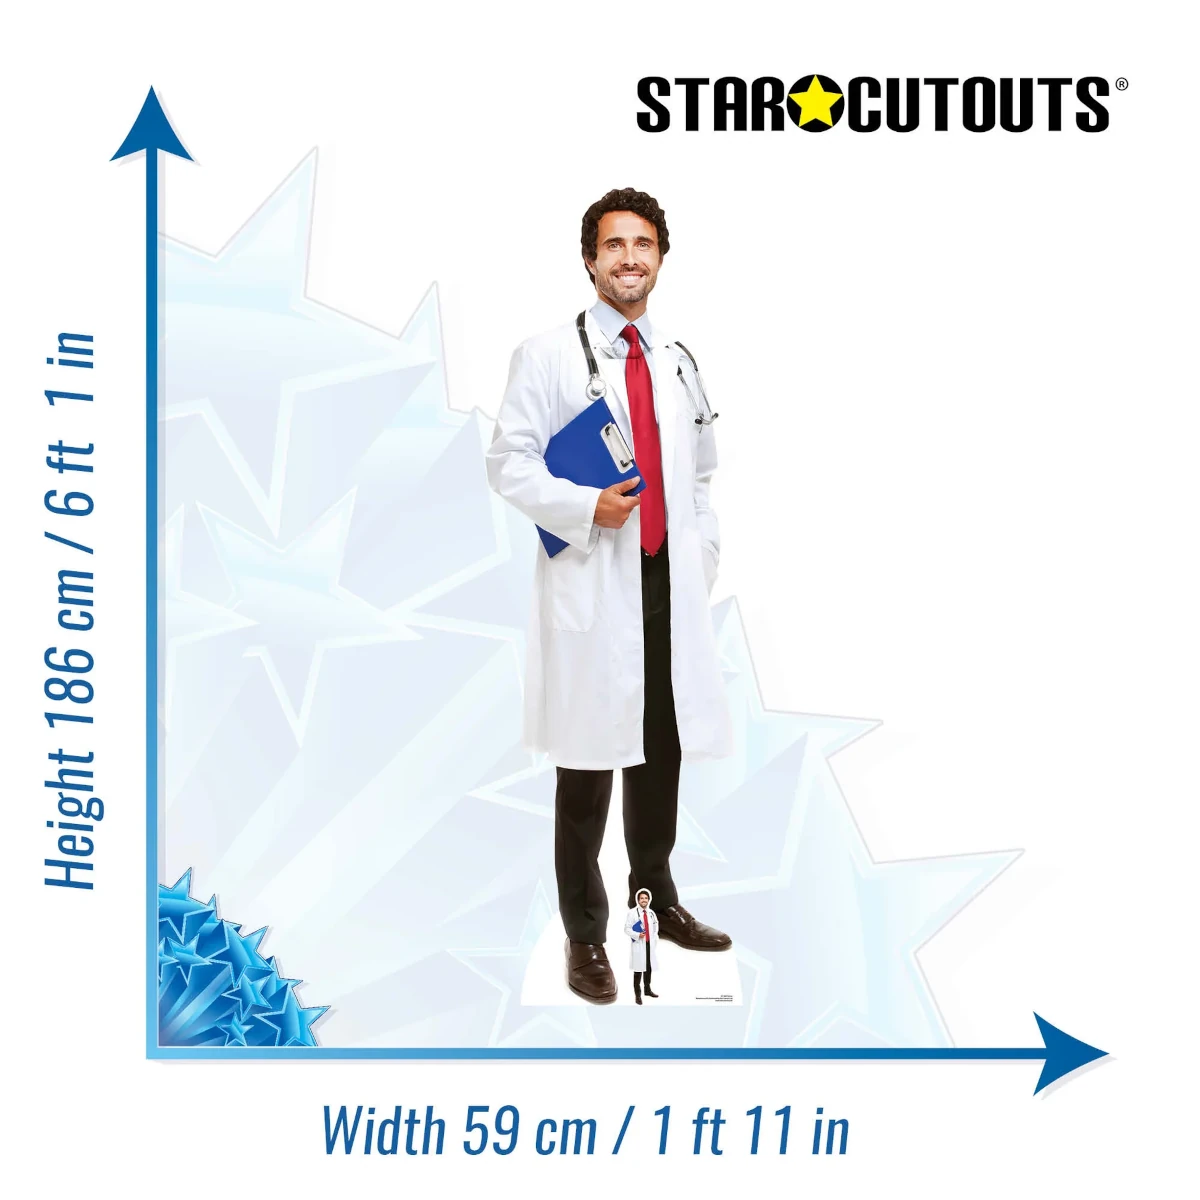 SC1584 Male Doctor Health Worker Lifesize + Mini Cardboard Cutout Standee Size